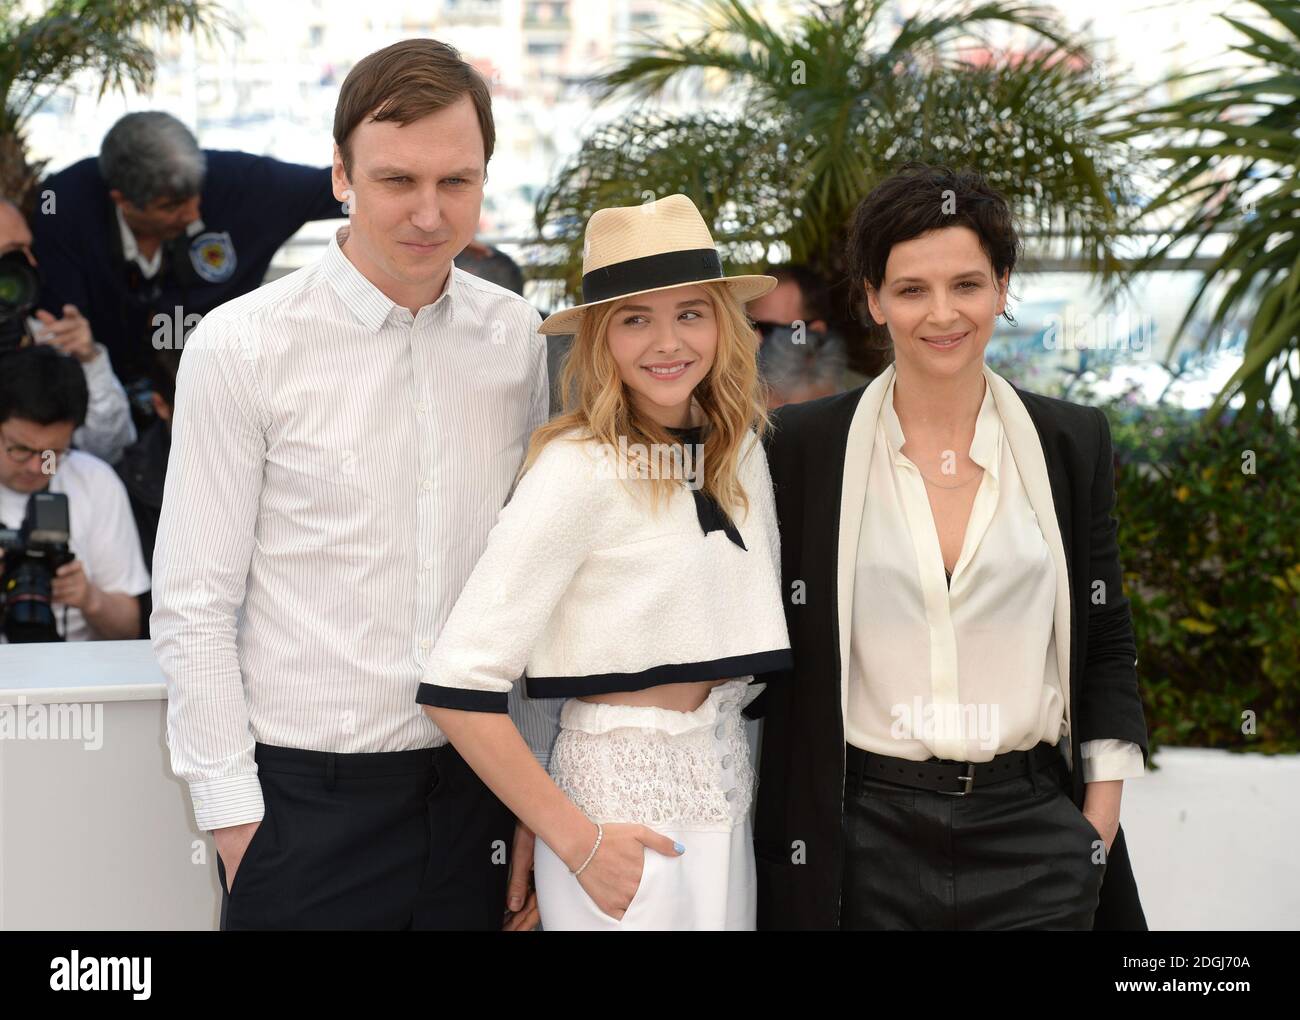 Chloe Grace Moretz partecipa alla fotocellula per Sils Maria al Palais du Festival, parte del 67° Festival di Cannes. Foto Stock